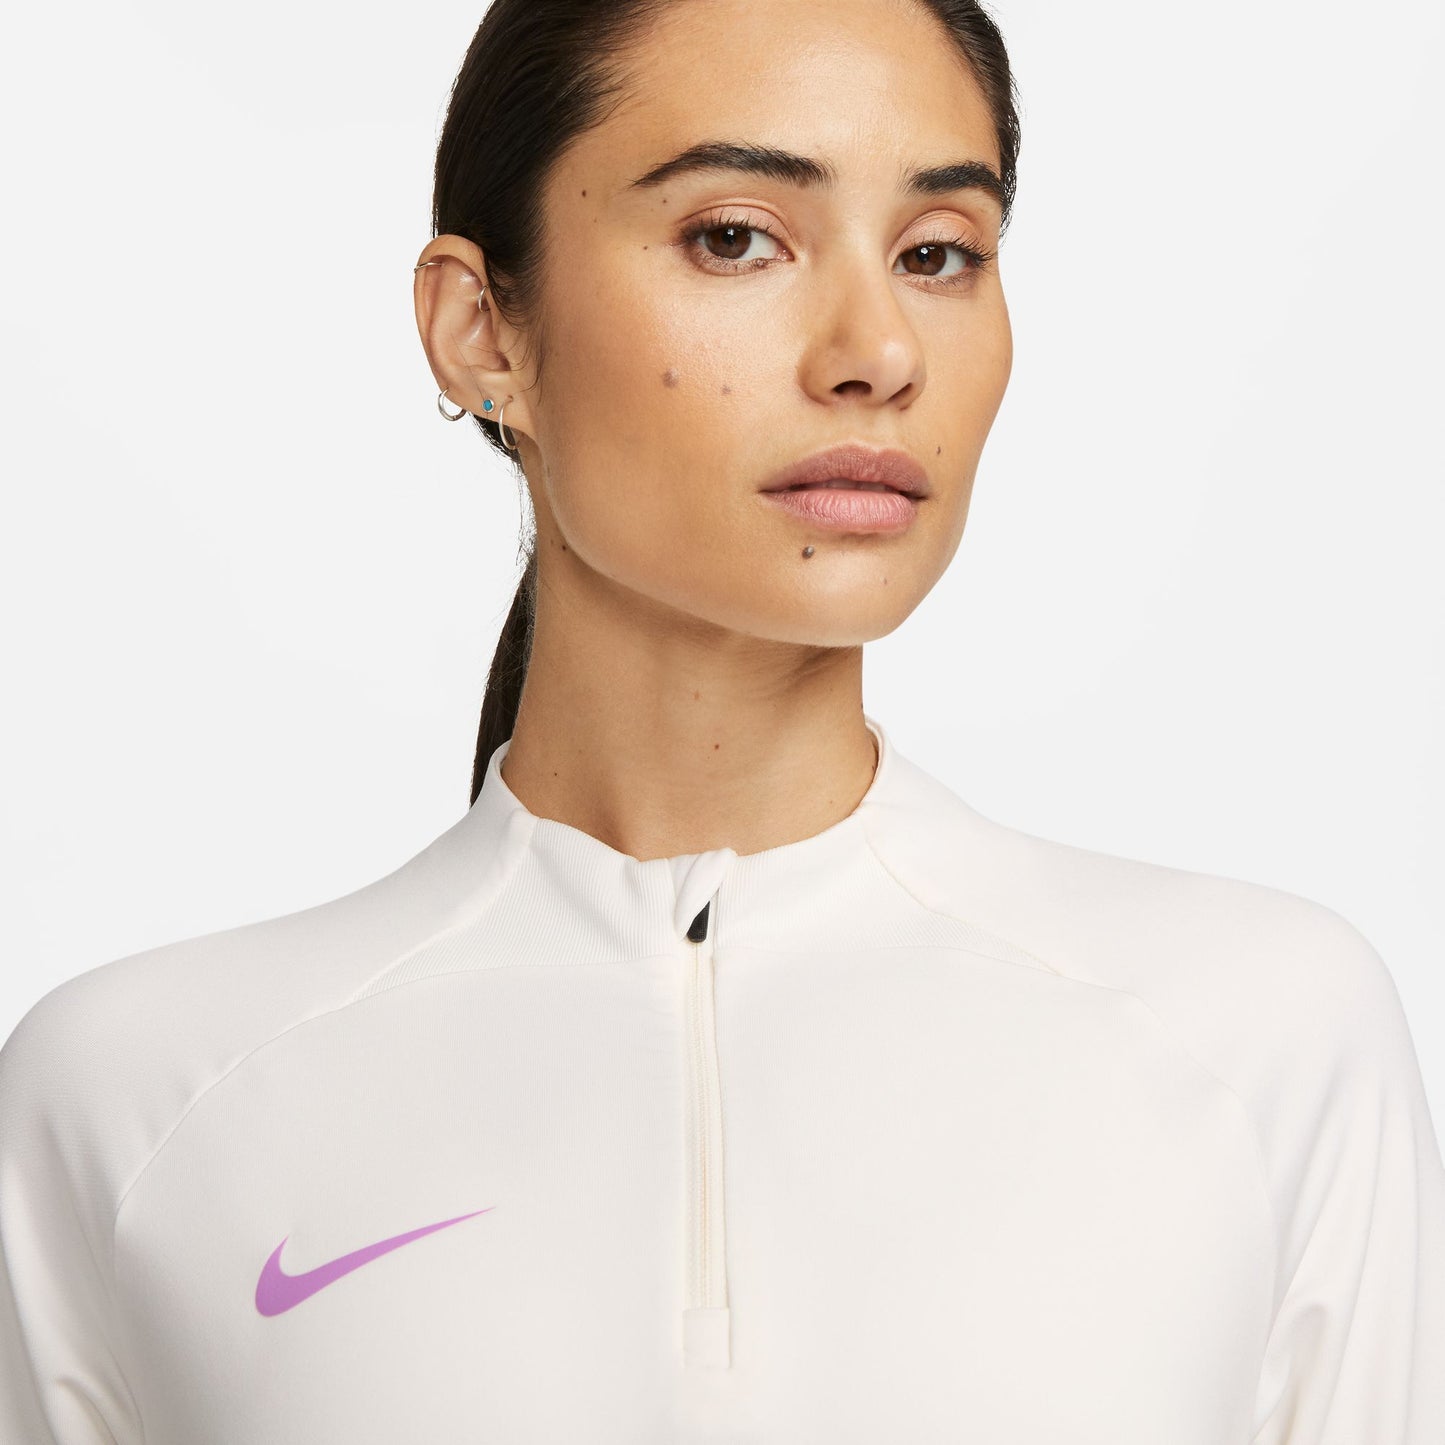 Nike Dri-FIT Strike Women's Long-Sleeve Drill Top